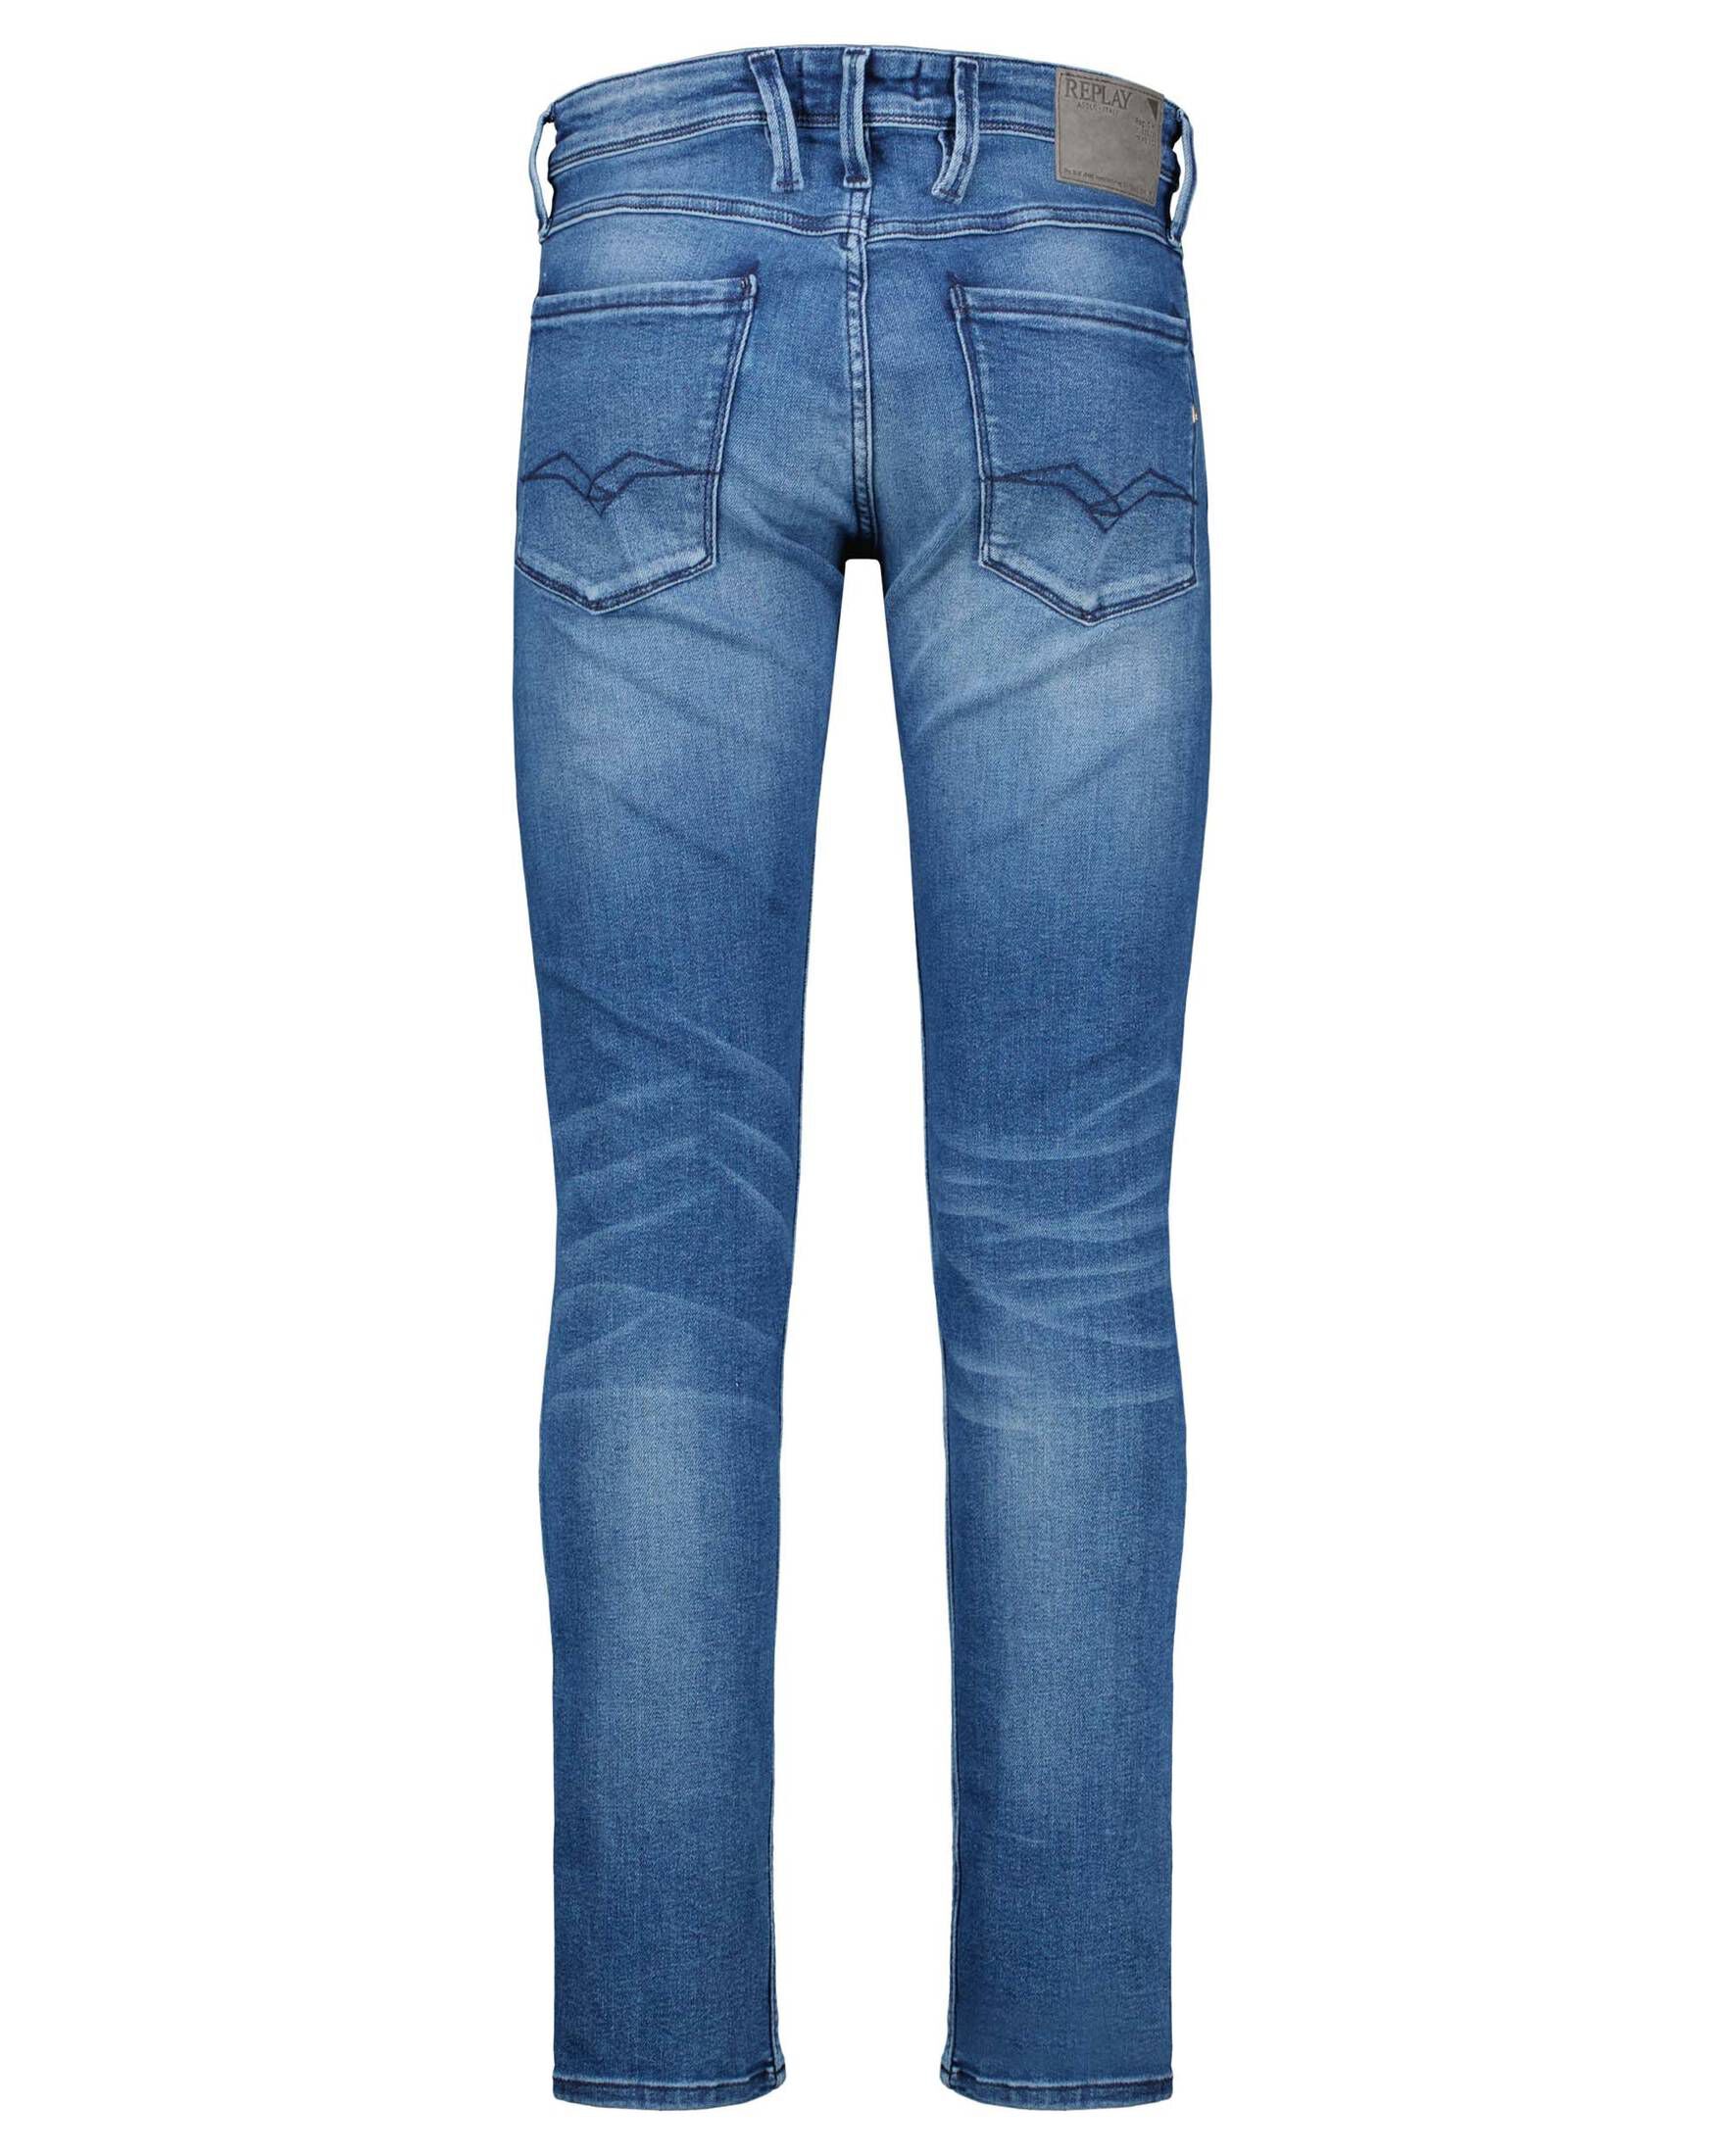 Replay Denim Jeans anbass in Blau für Herren Herren Bekleidung Jeans Enge Jeans 